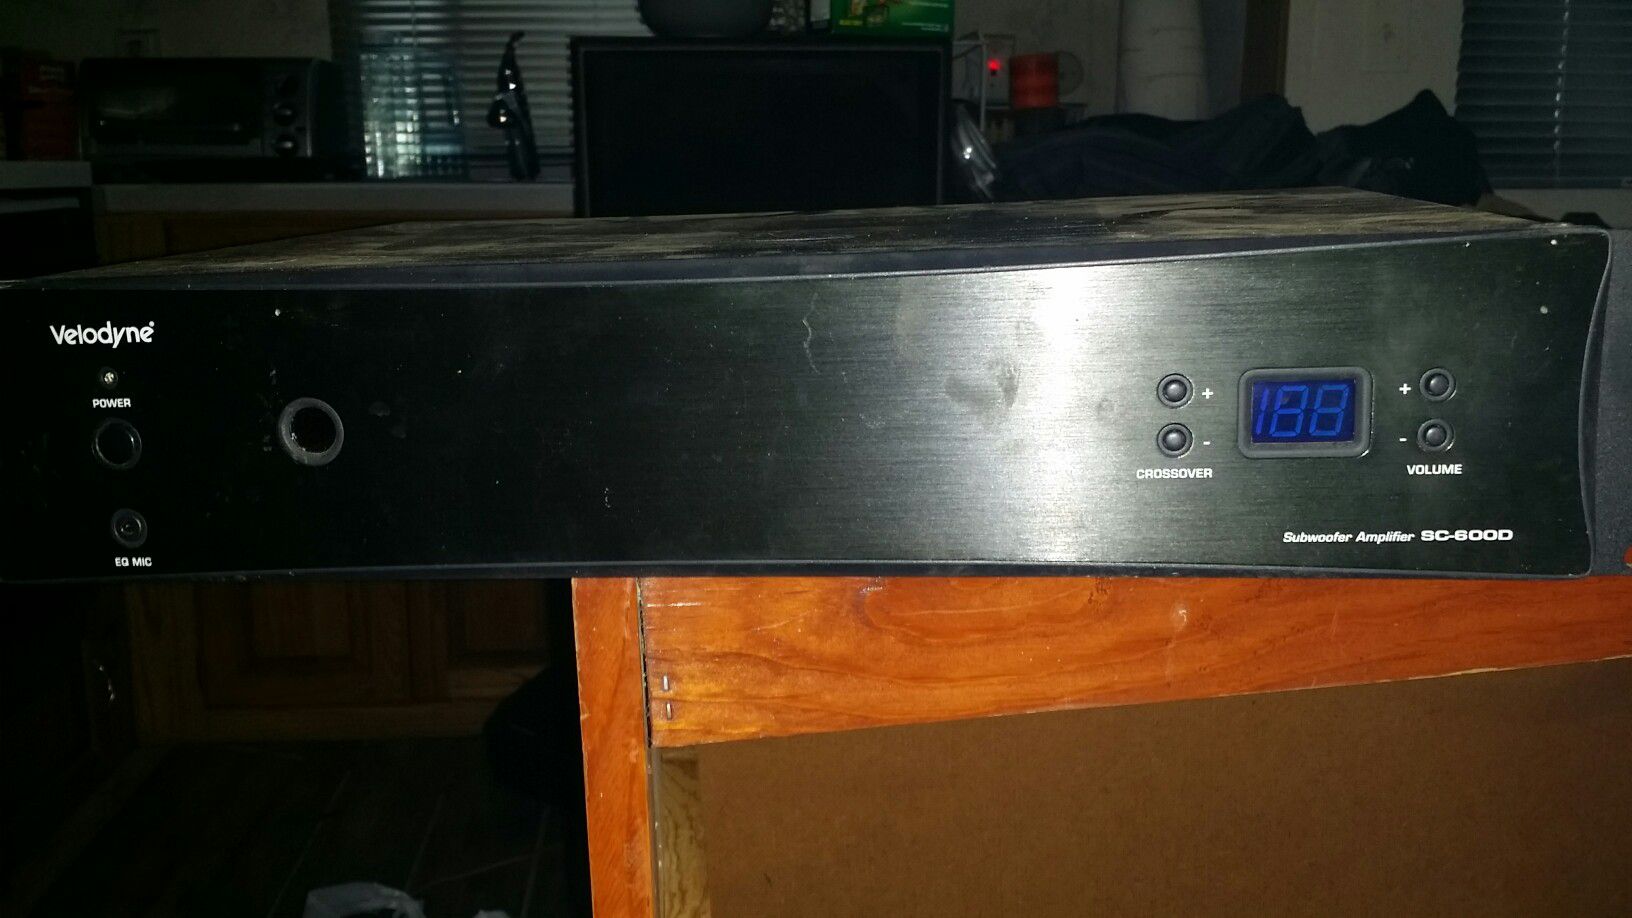 Velodyne subwoofer amplifier SC-600D